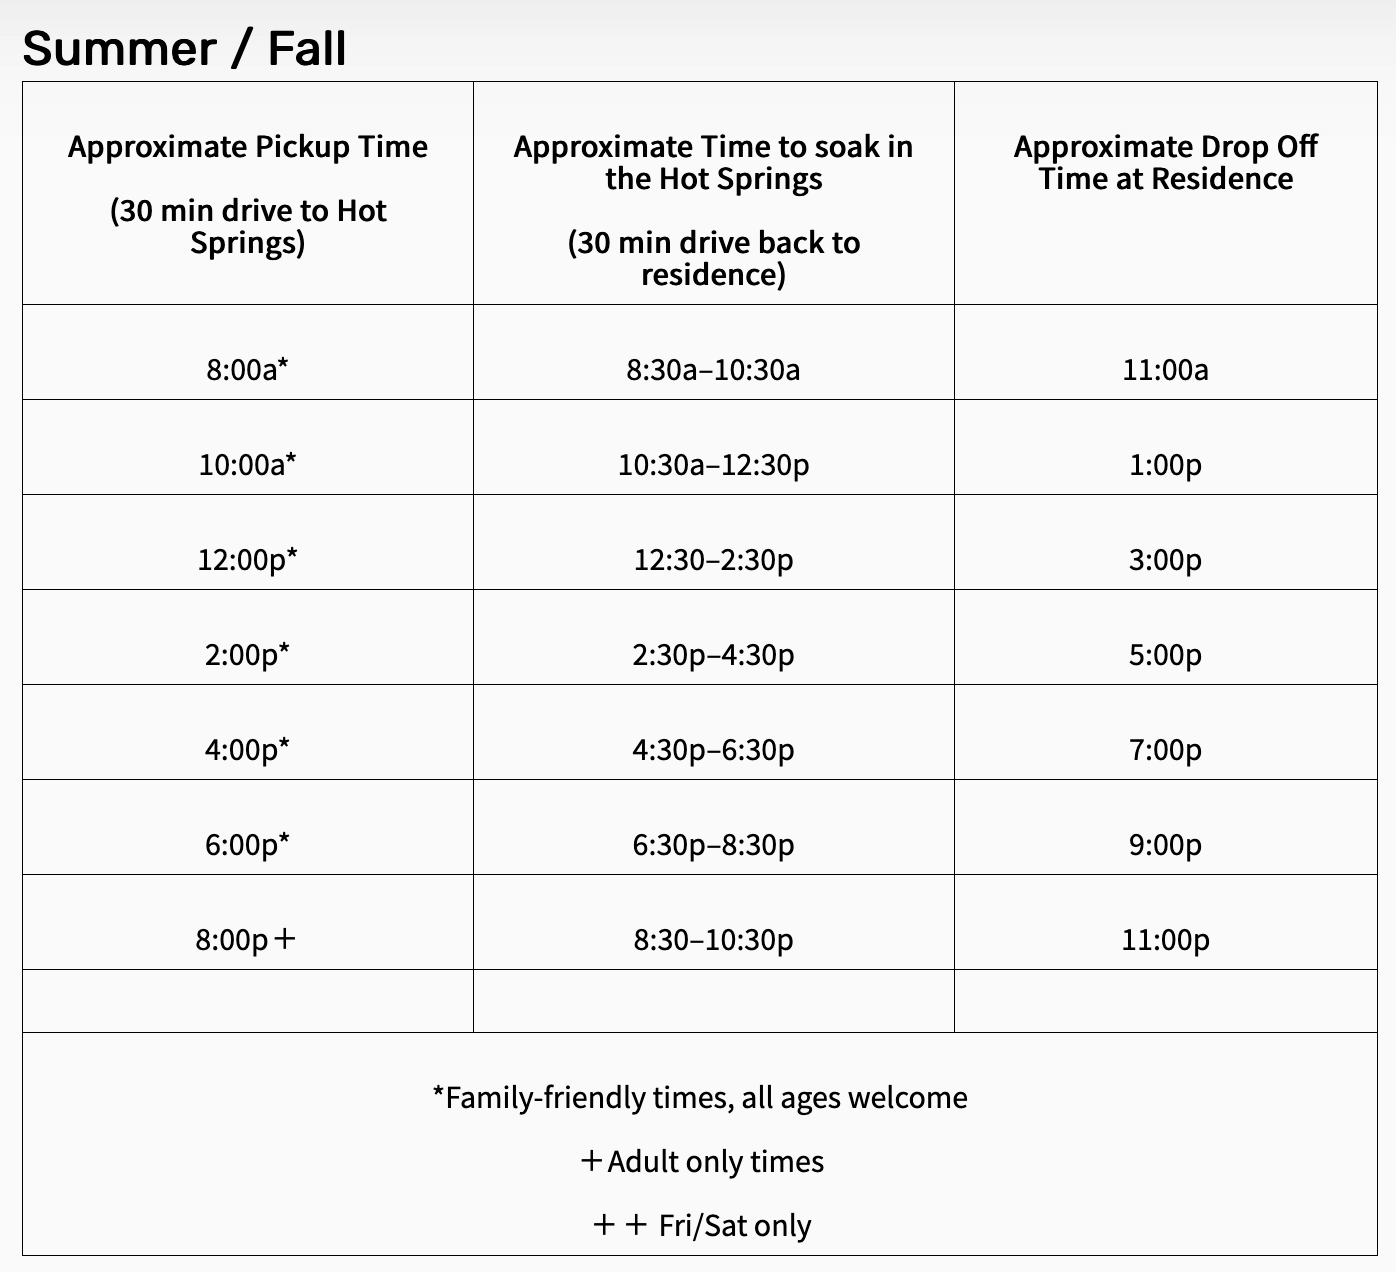 Summer/Fall table